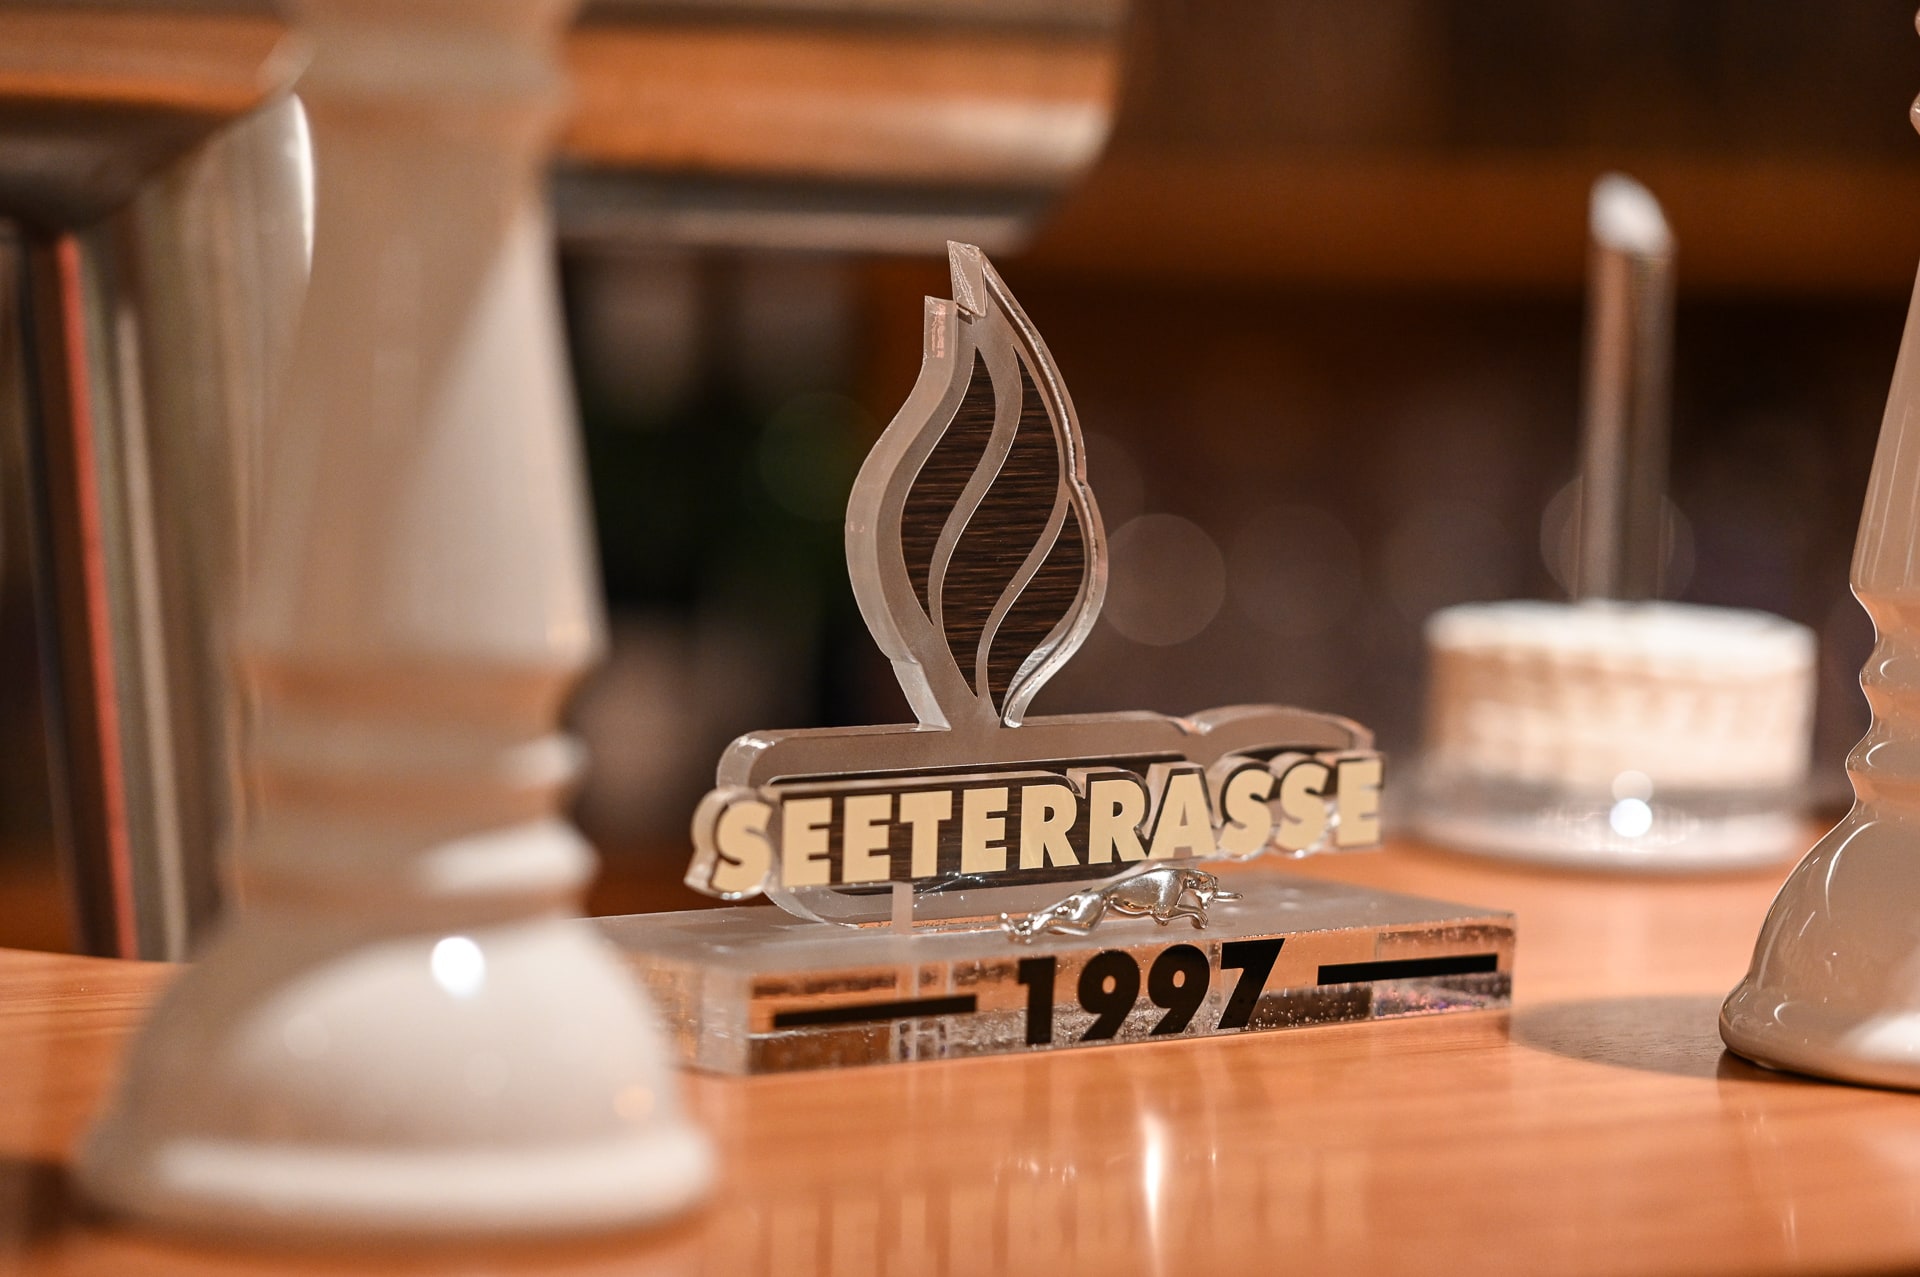 Restaurant Seeterrasse Salzgitter - 1997